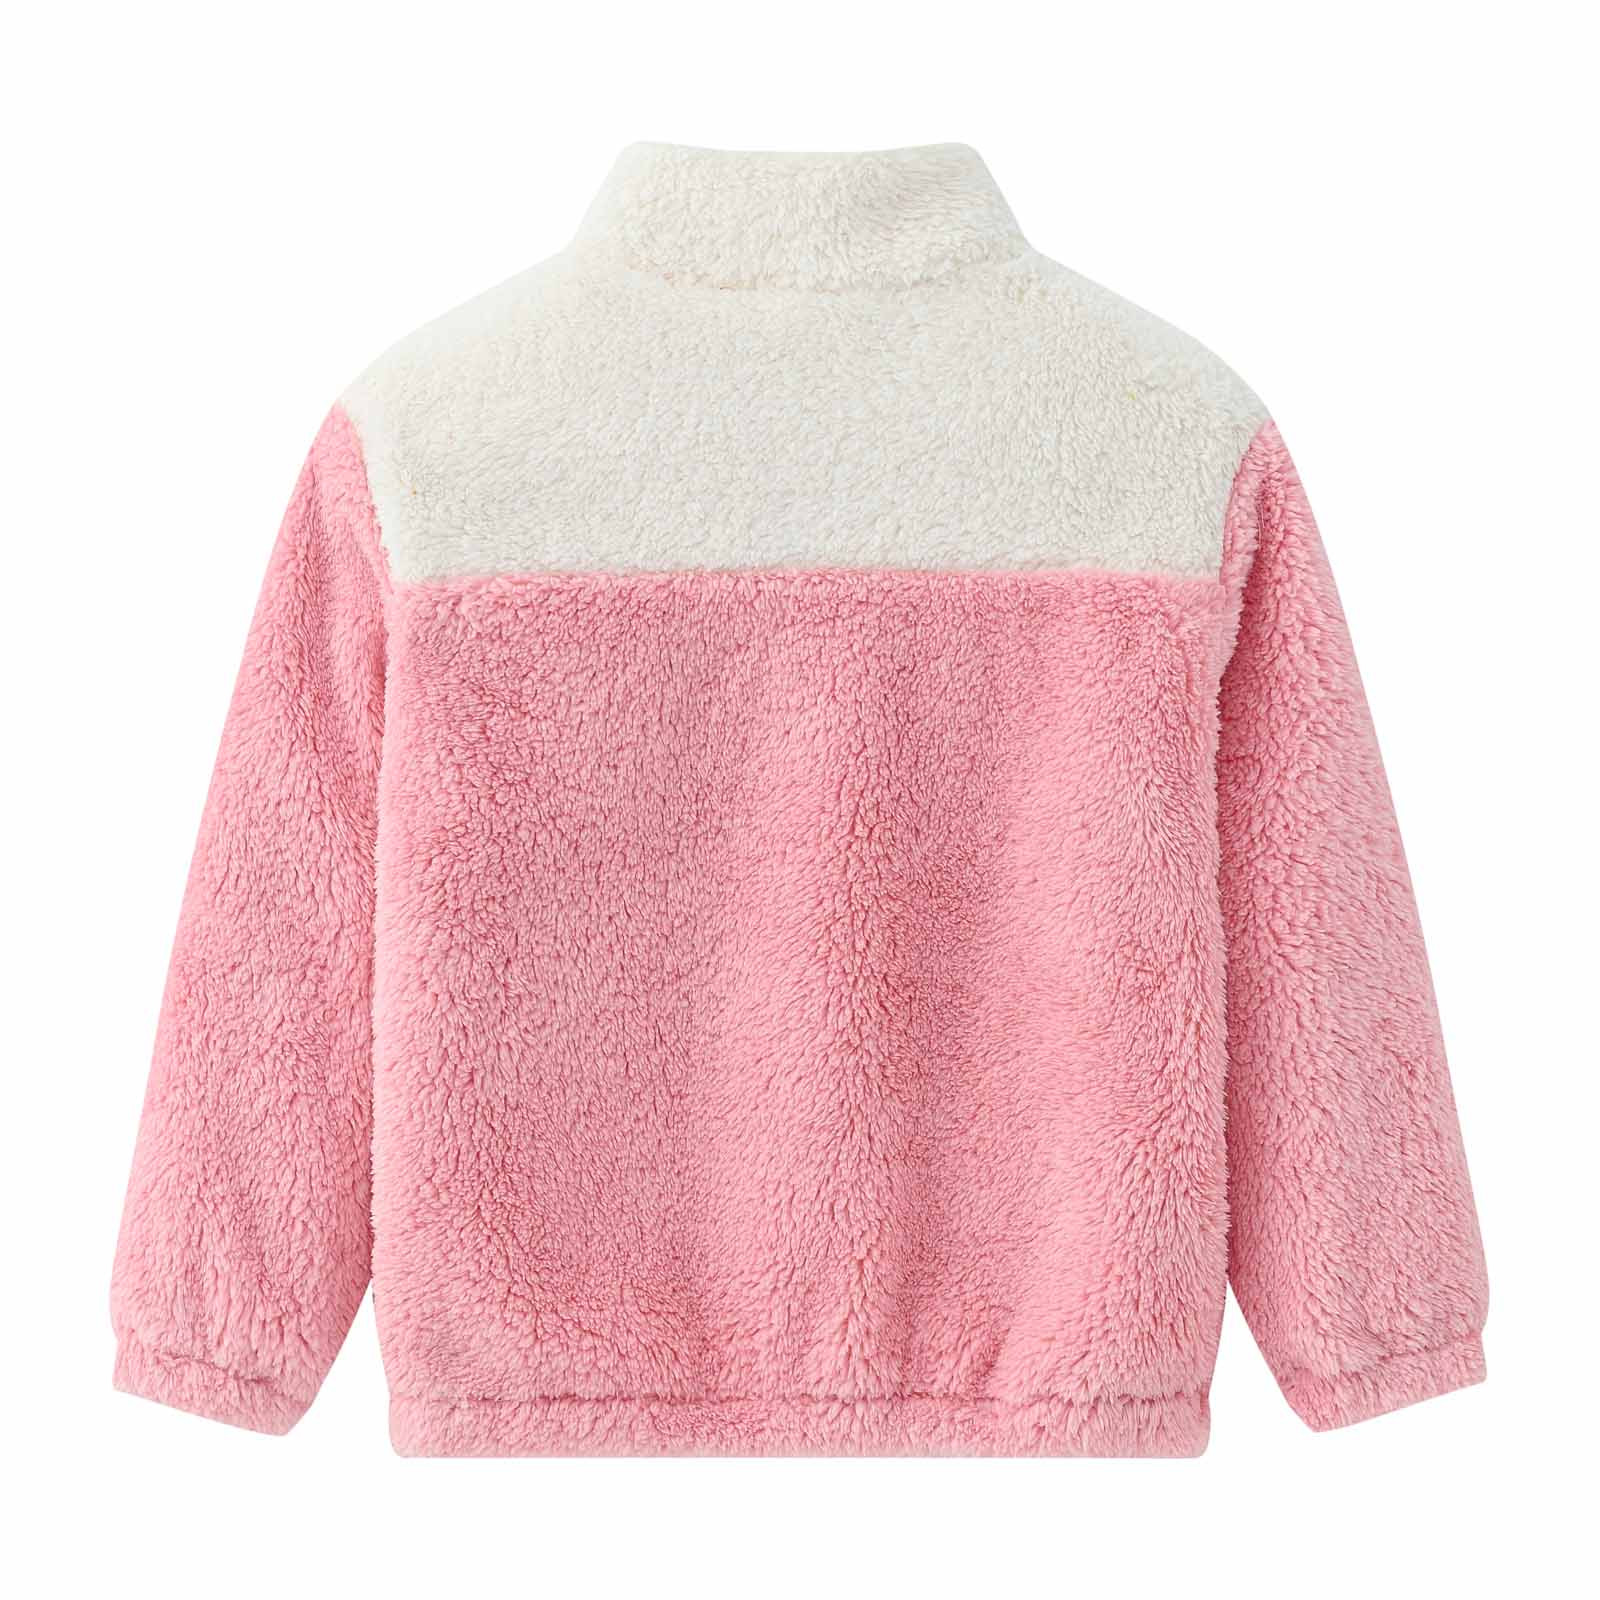 YYDGH Girls Zipper Jacket Fuzzy Sweatshirt Long Sleeve Casual Cozy Fleece Sherpa Outwear Coat Full-Zip Rainbow Jackets(Pink,5-6 Years) - image 5 of 8